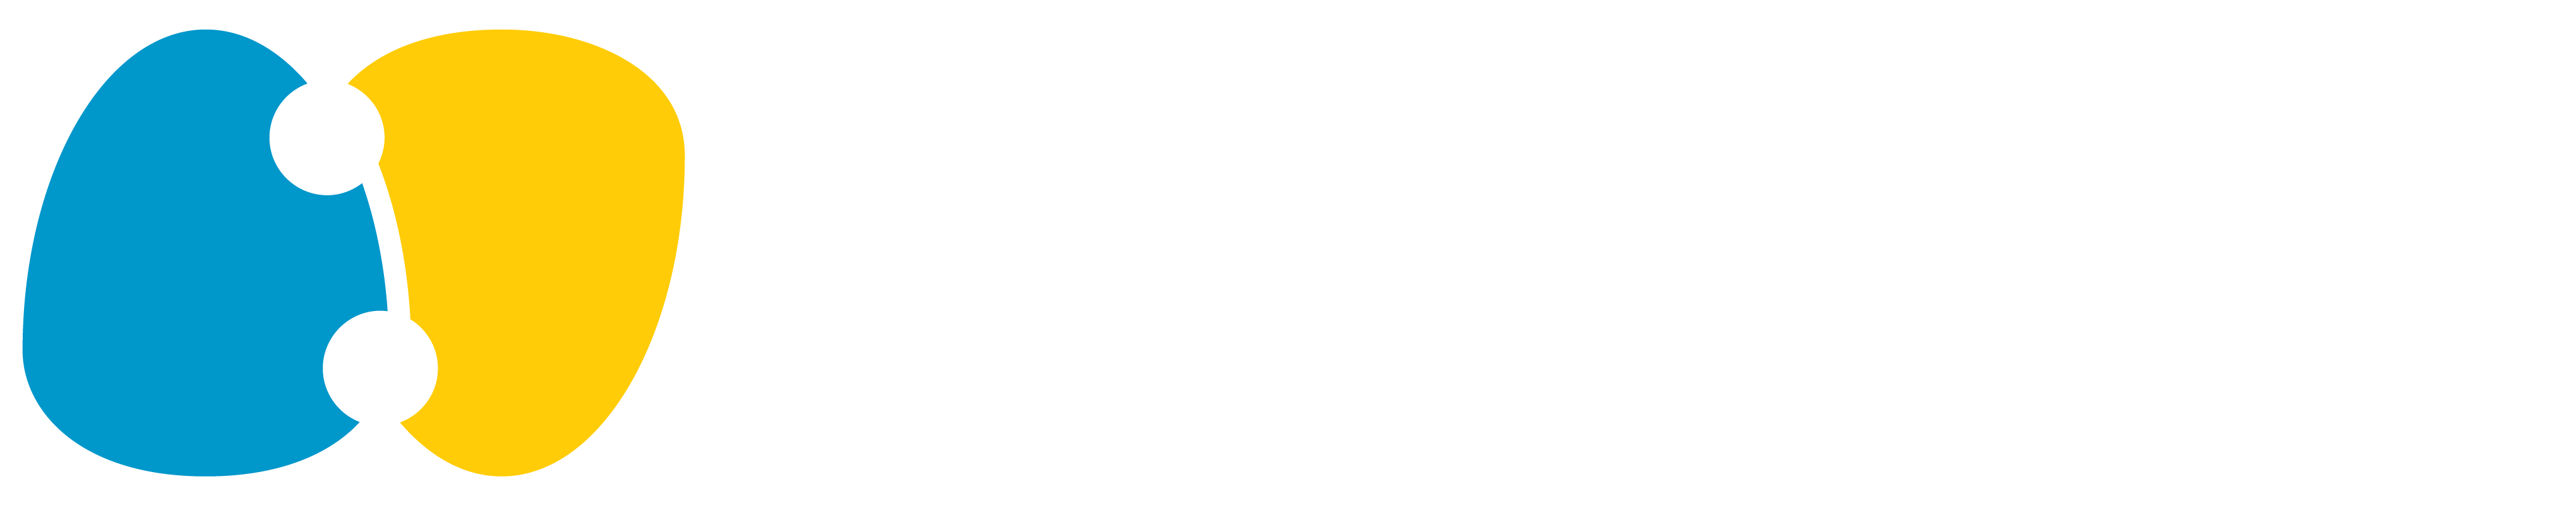 Runtime Verification logo